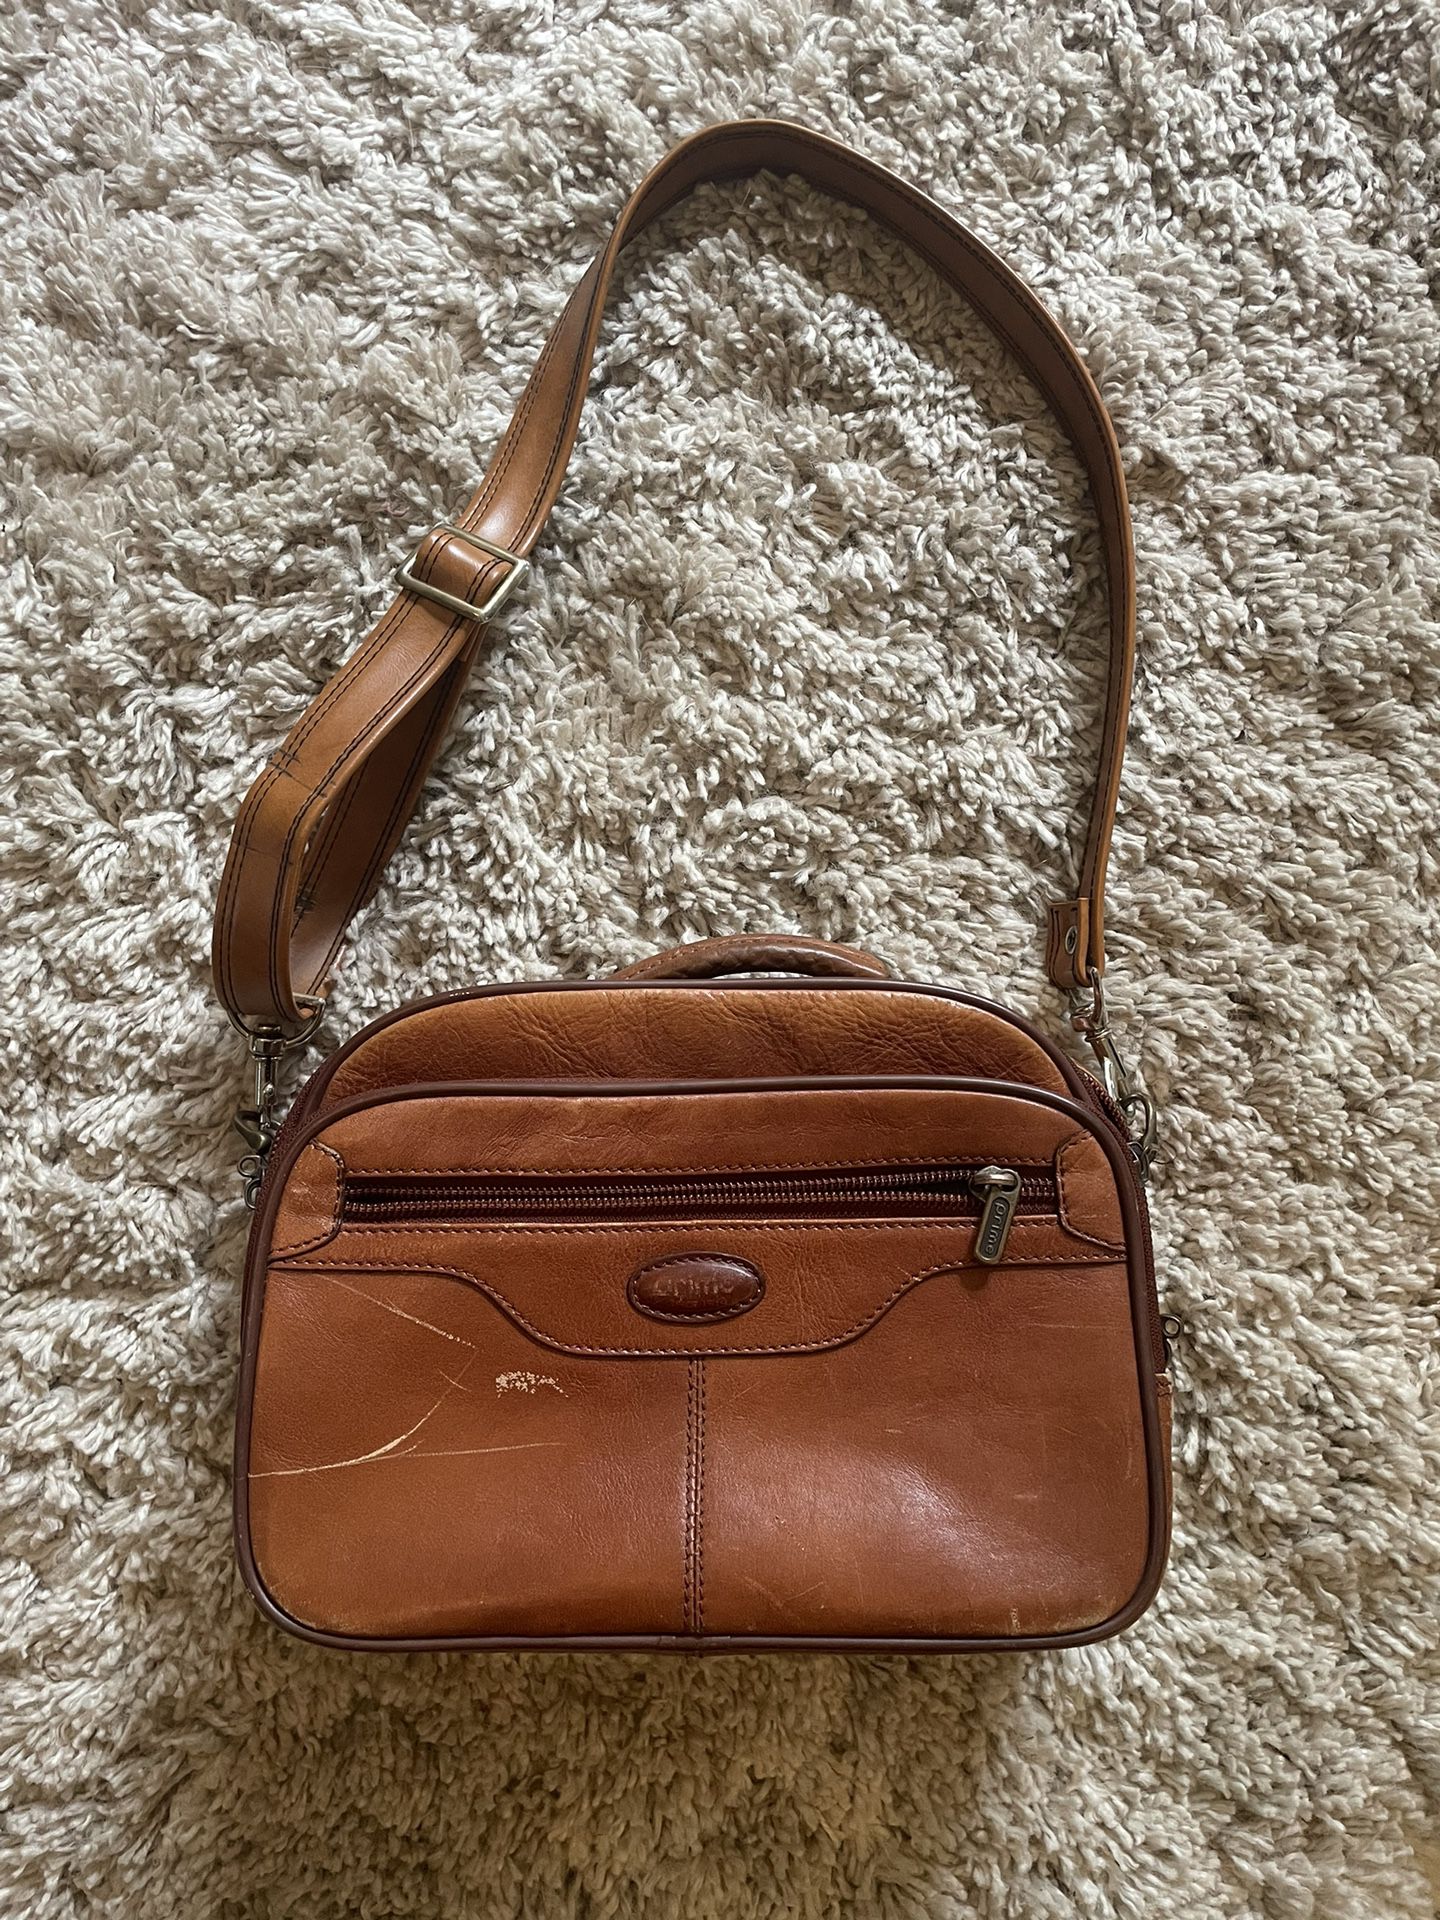 Leather Purse/bag